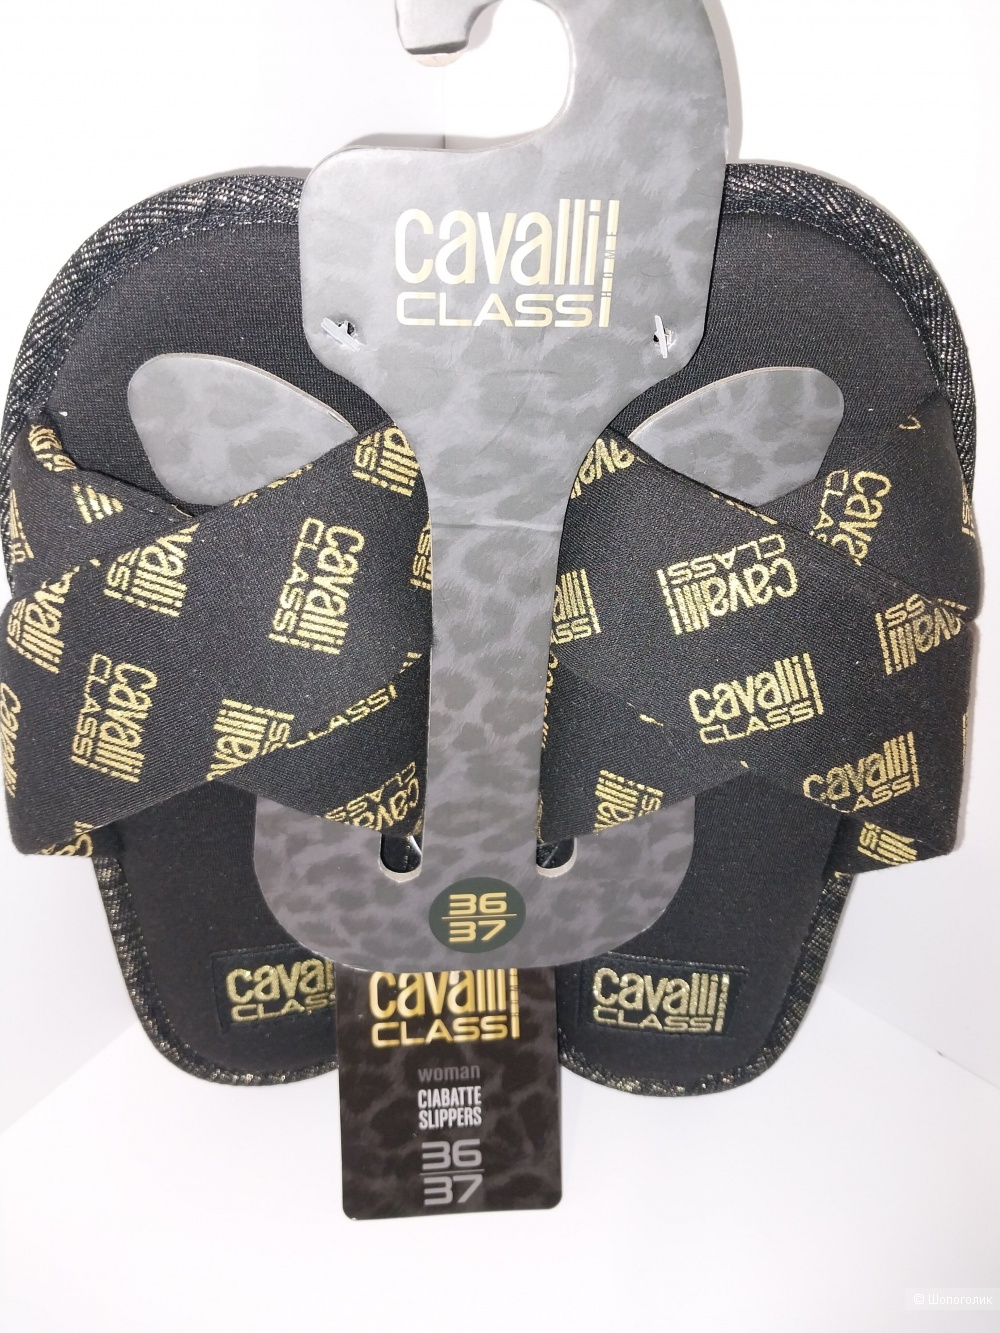 Cavalli Class тапочки домашние размер 36/37